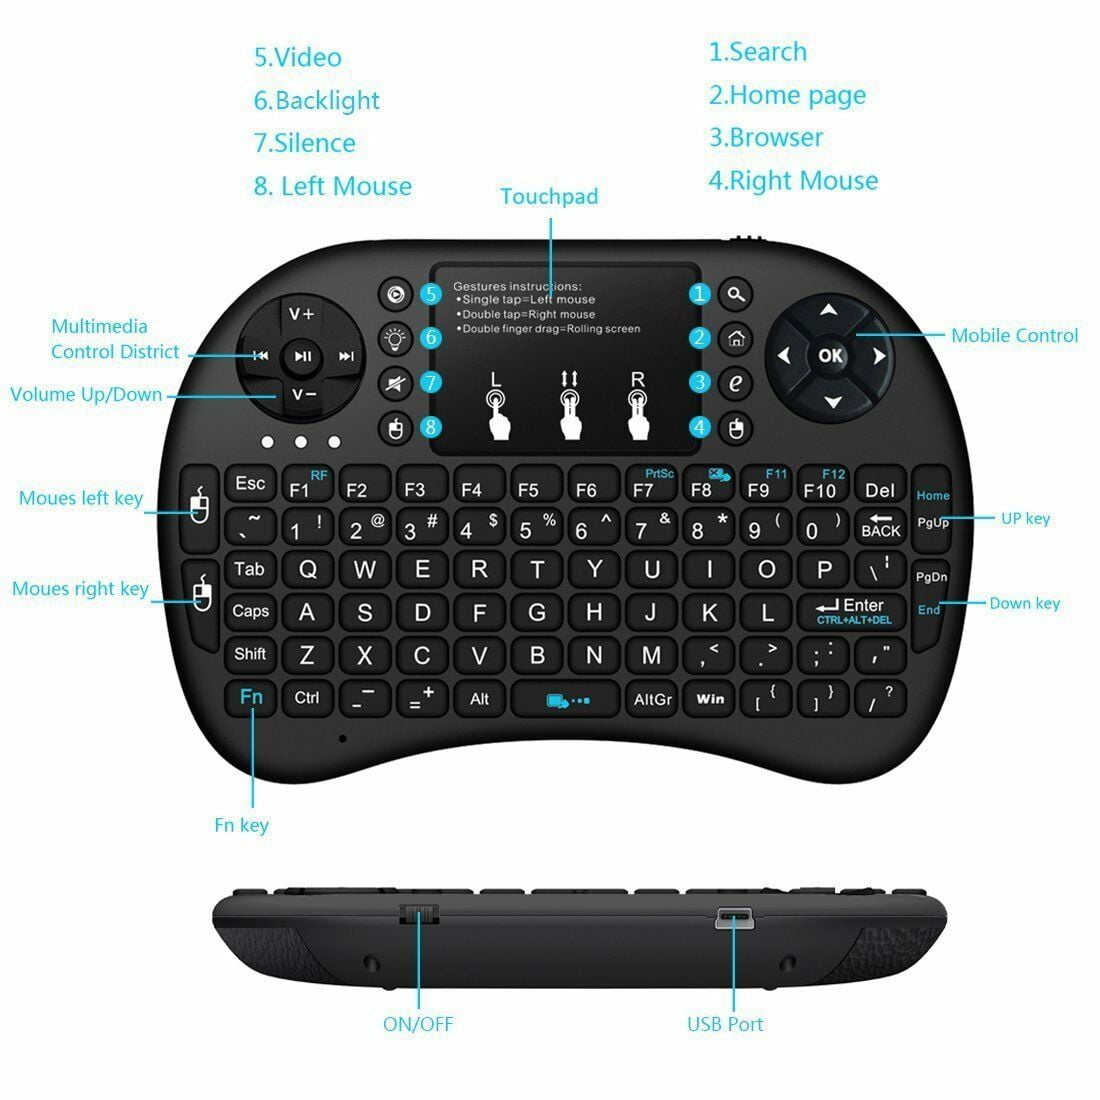 Wireless Remote Keyboard Mouse for Samsung Smart TV Android Kodi TV Box - Walmart.com